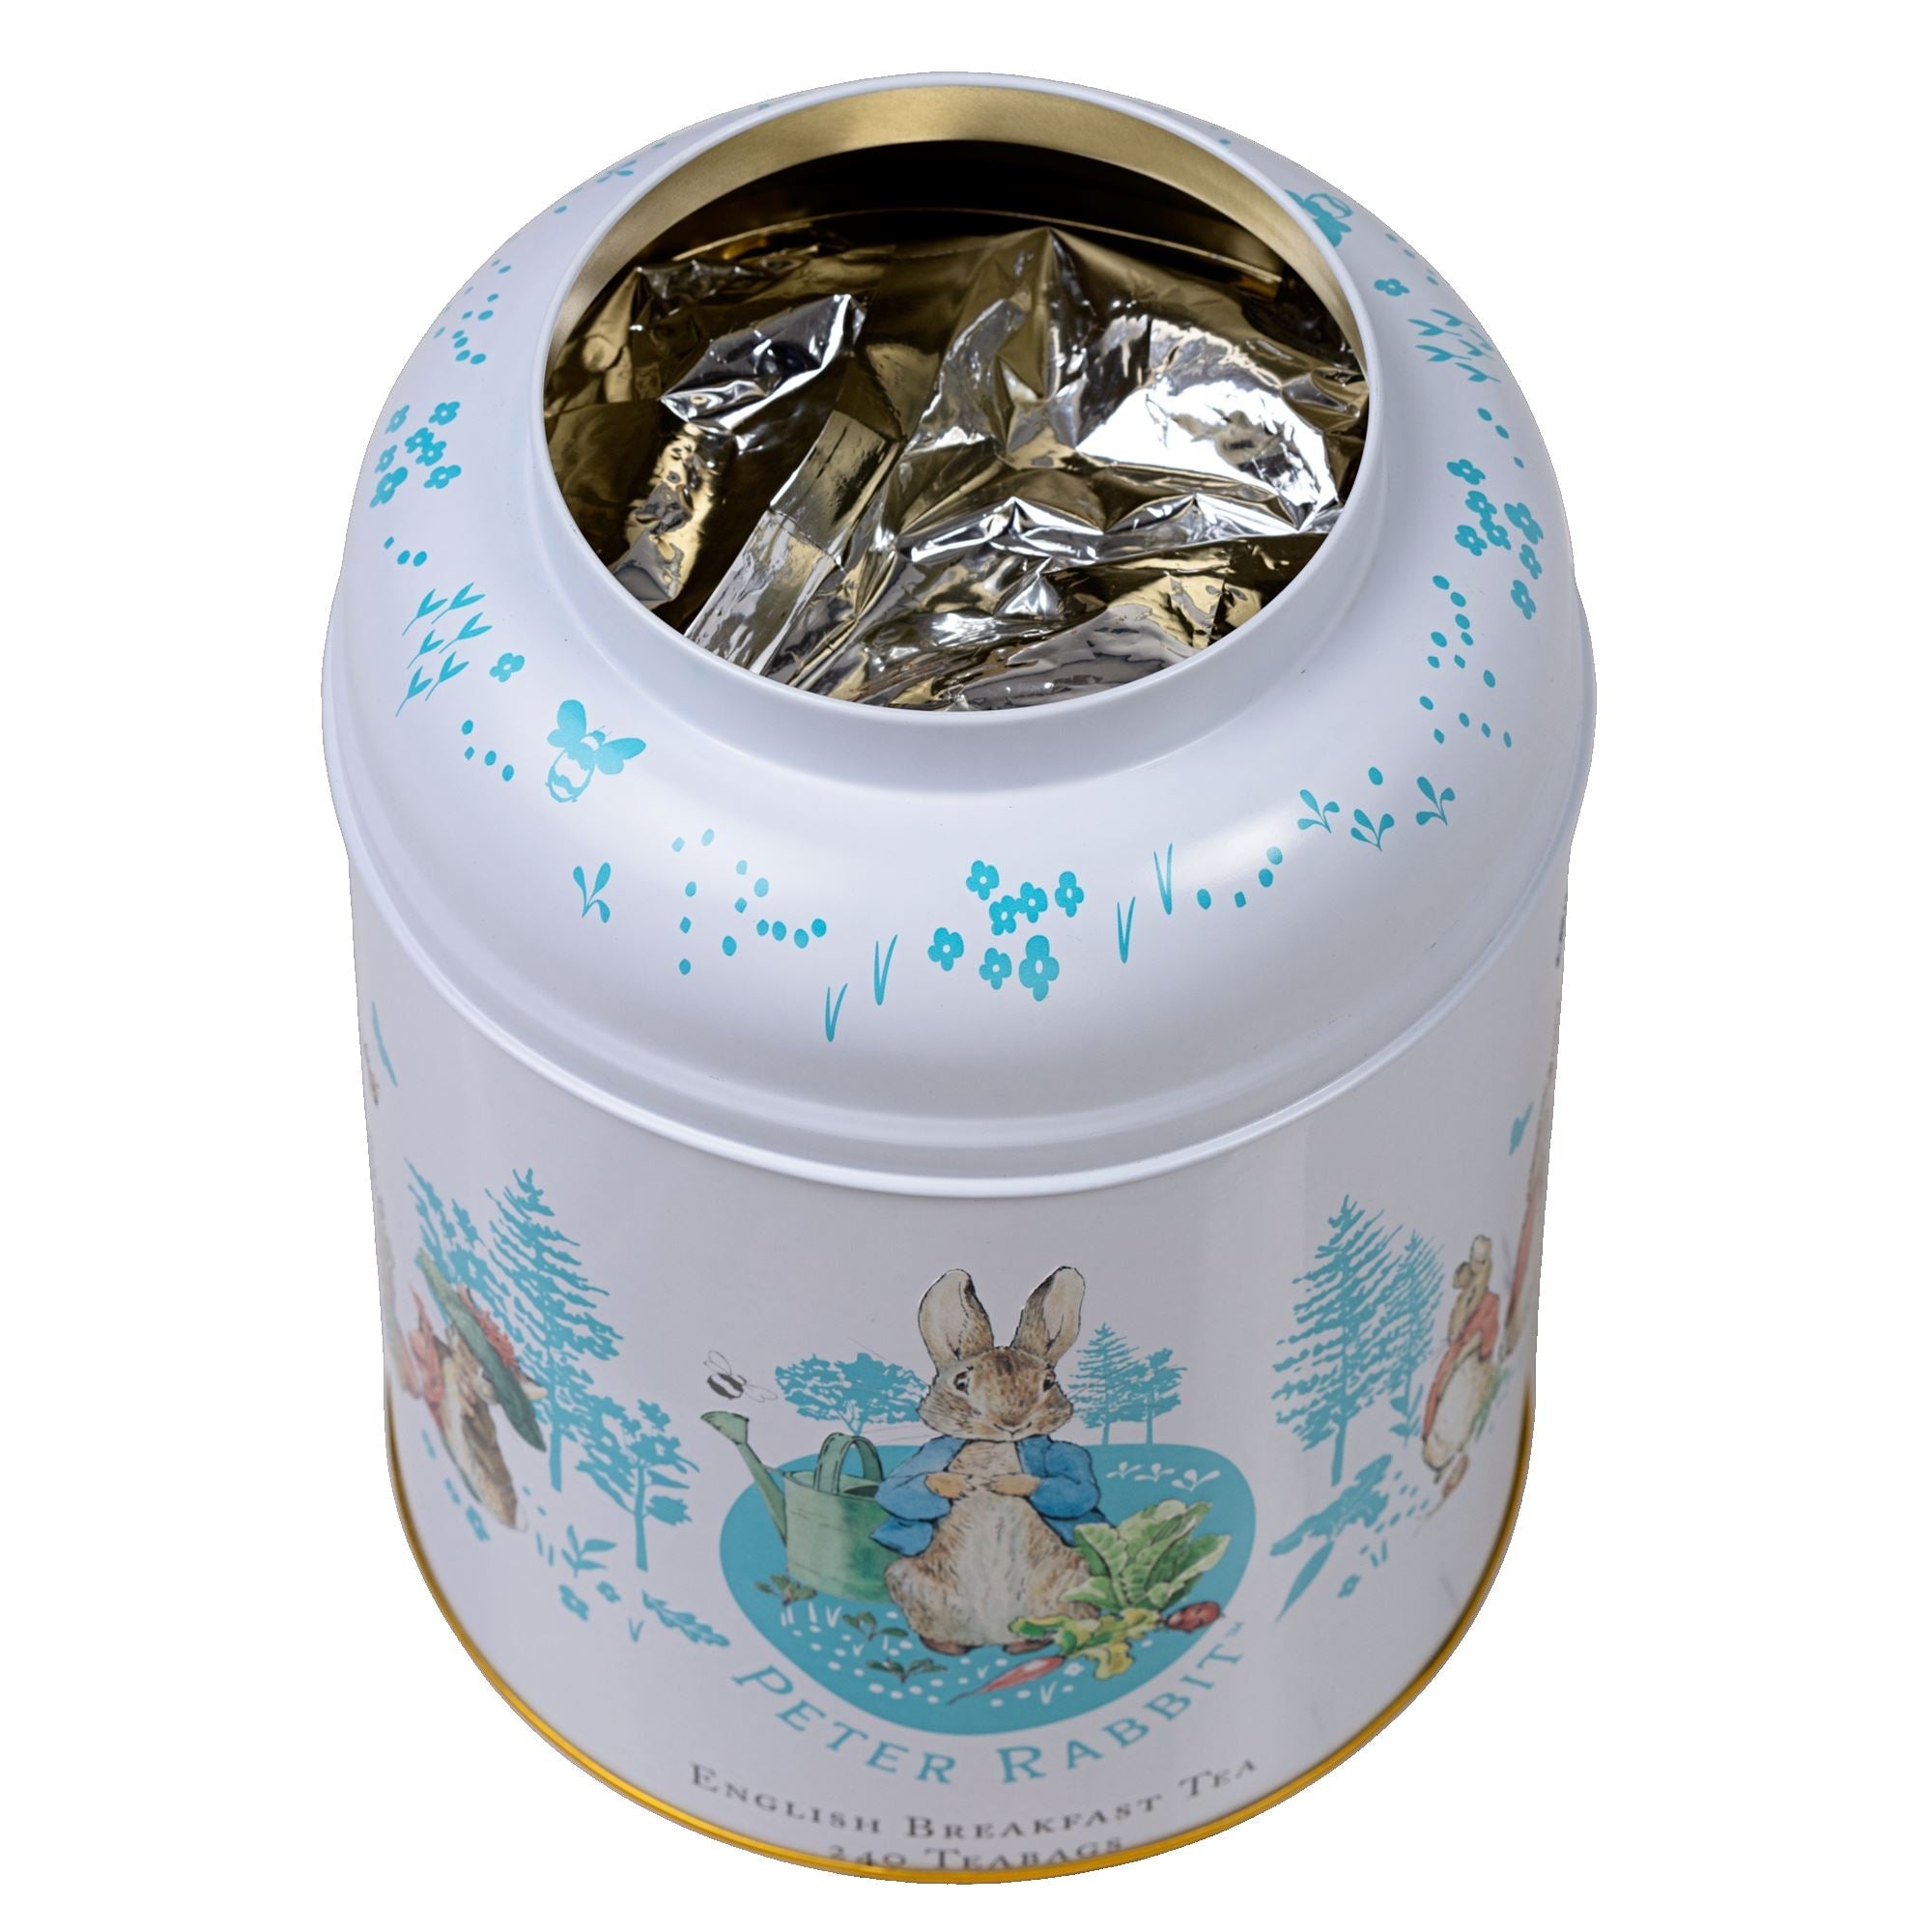 Classic Peter Rabbit Tea Caddy with 240 English Breakfast teabags Black Tea New English Teas 